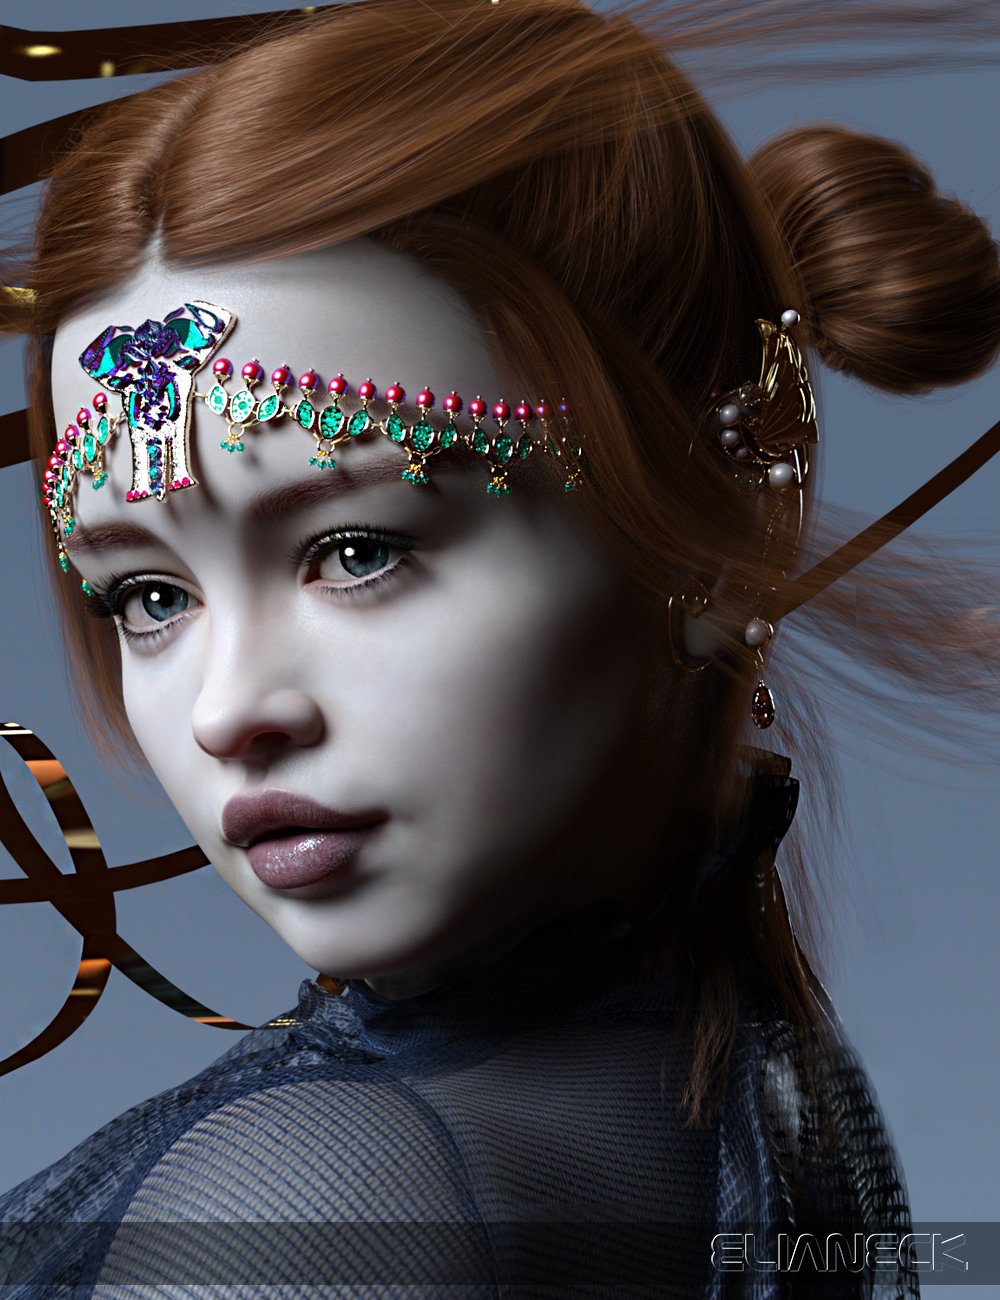 Branca for Genesis 8 Female by: Elianeck, 3D Models by Daz 3D